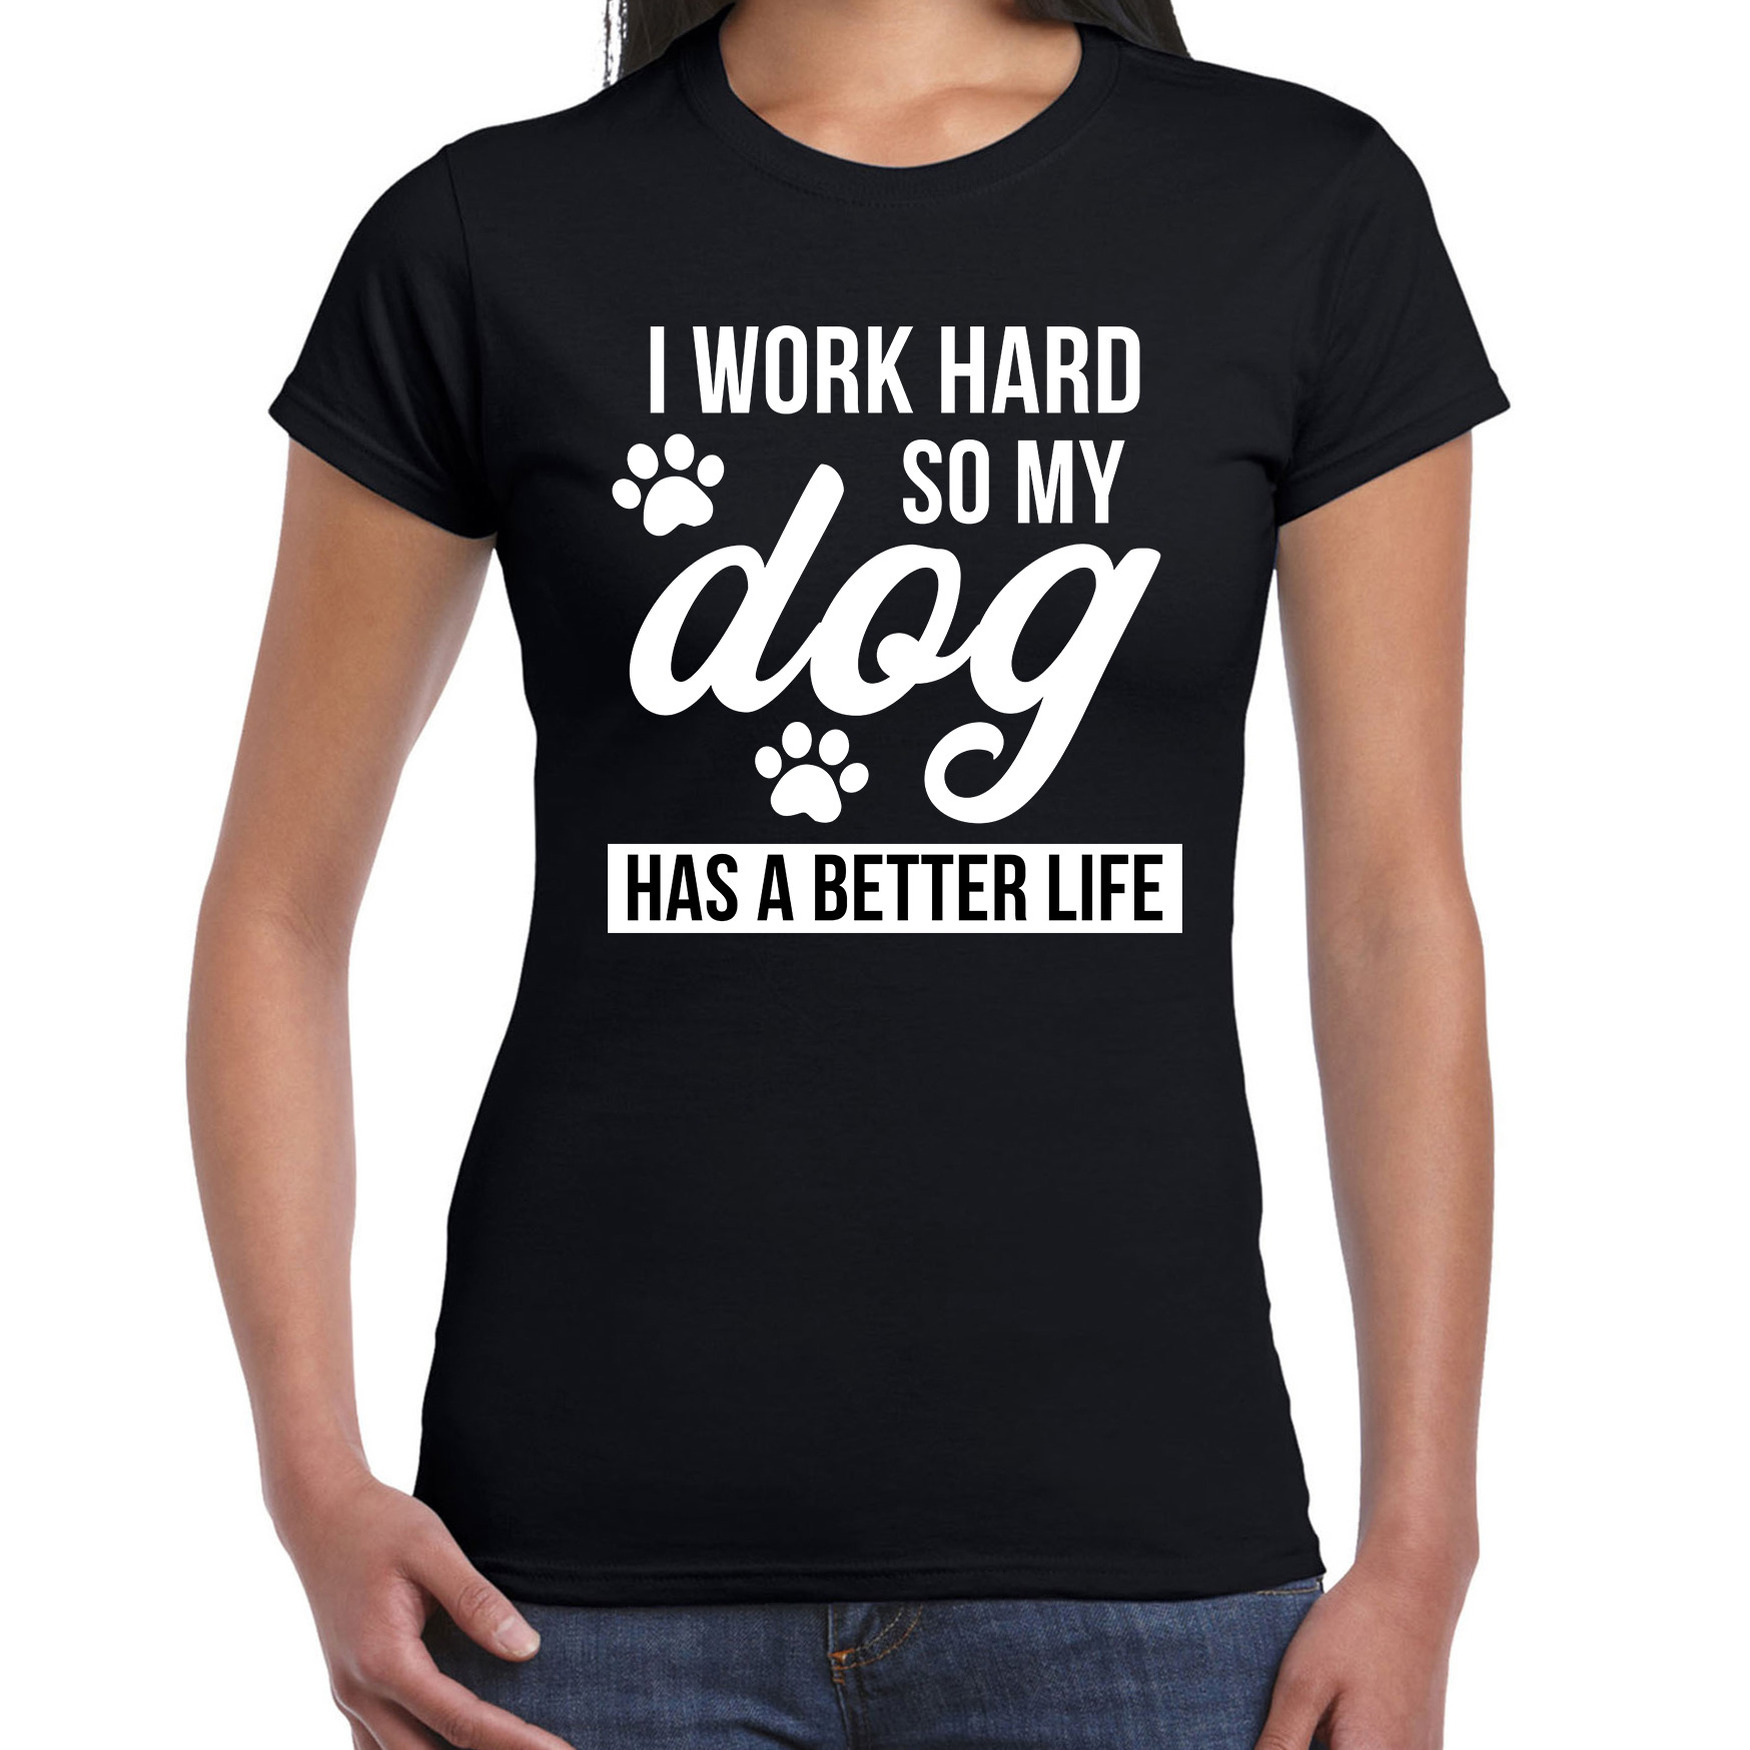 Work hard so dog has better life-Werk hard hond beter leven t-shirt zwart voor dames